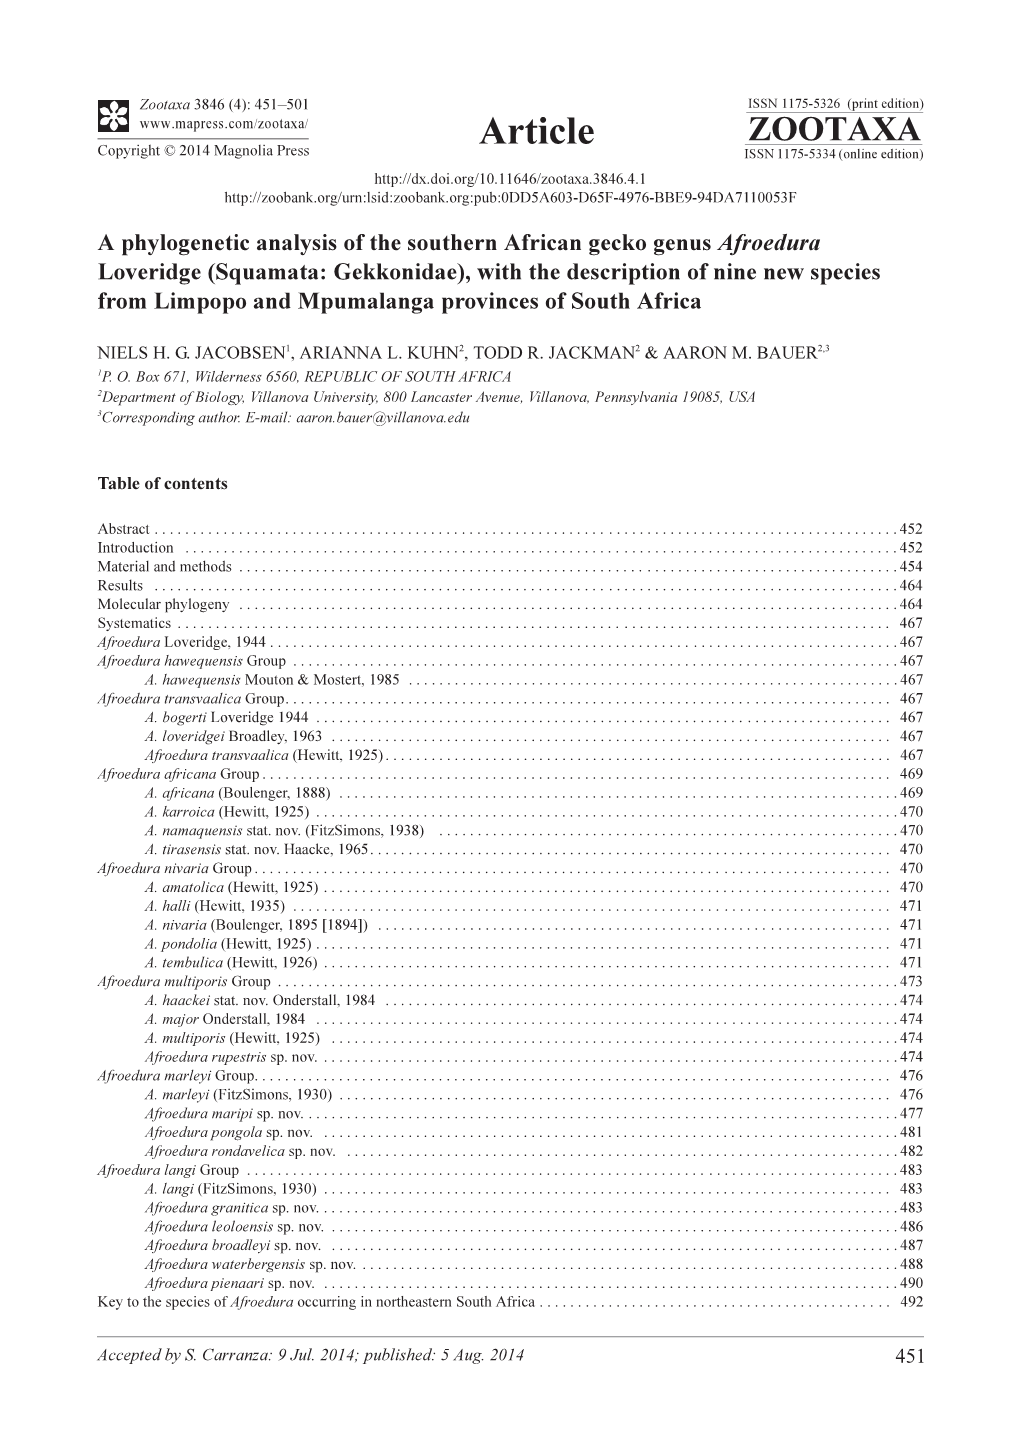 A Phylogenetic Analysis of the Southern African Gecko Genus Afroedura Loveridge